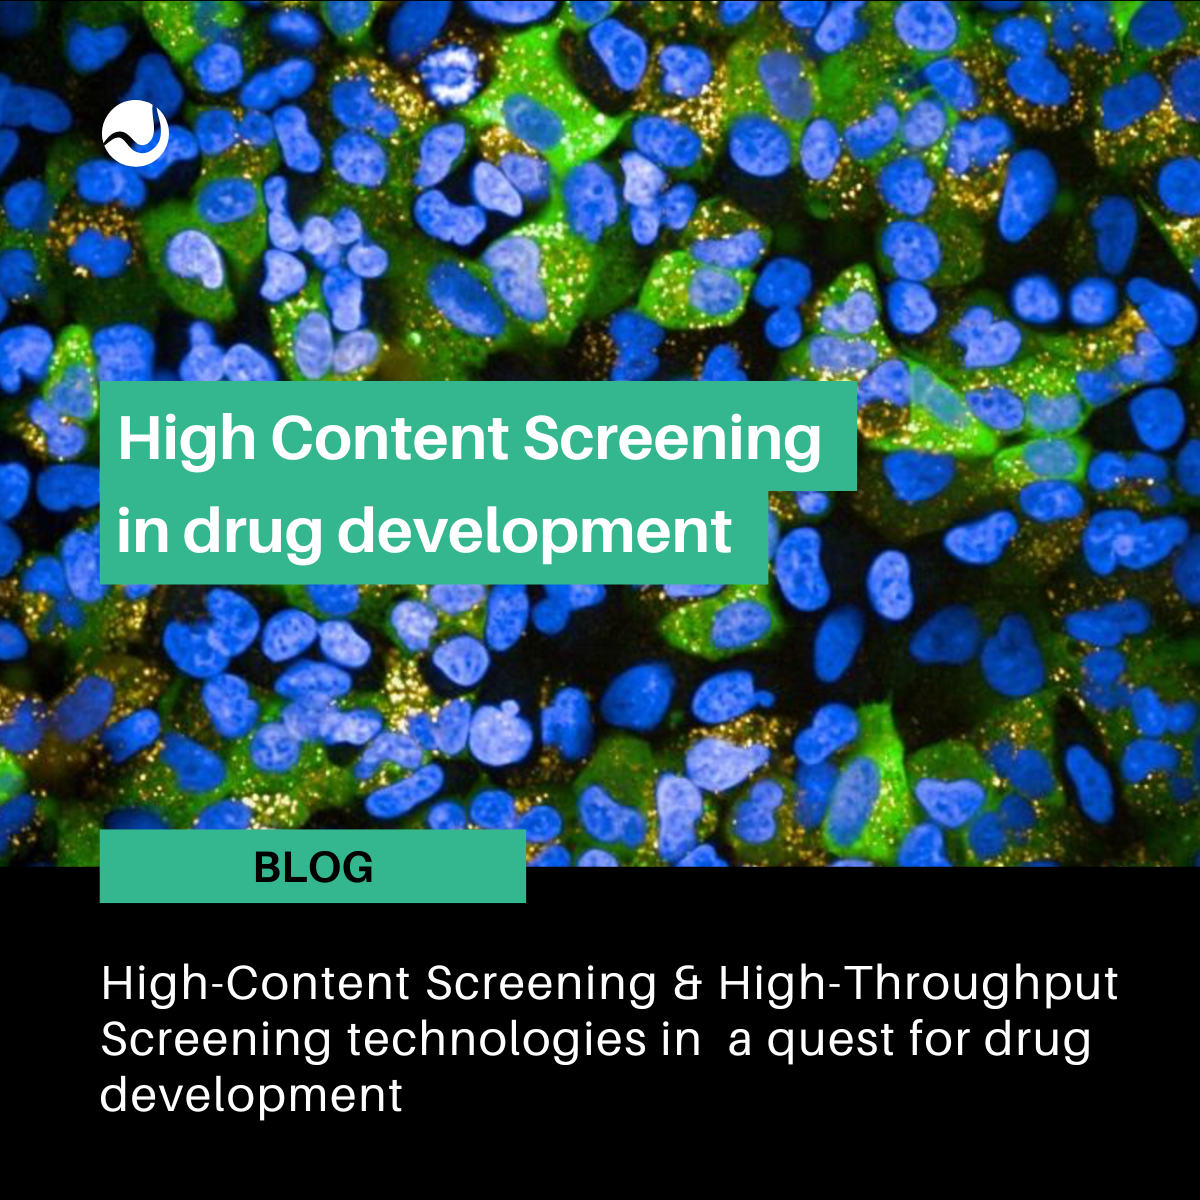 High-Content Screening technologies and drug development